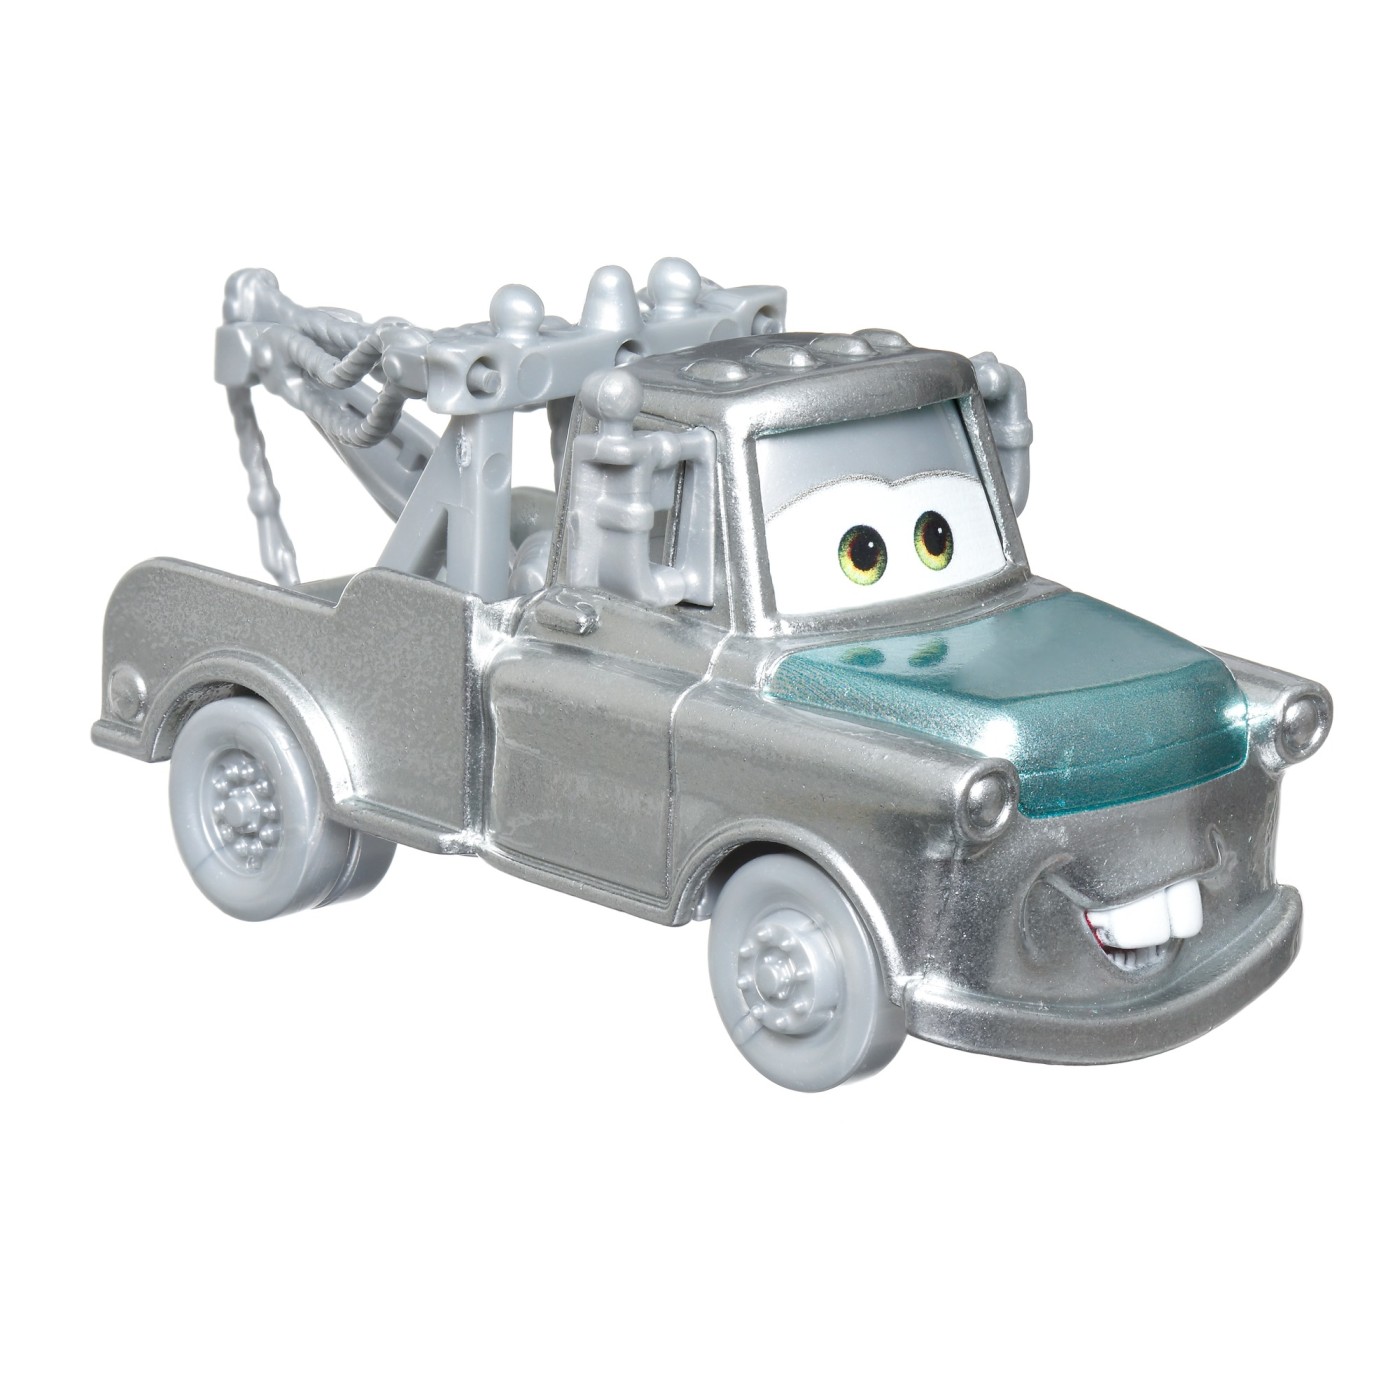 Masinuta - Disney Cars - Disney 100: Mater | Mattel - 2